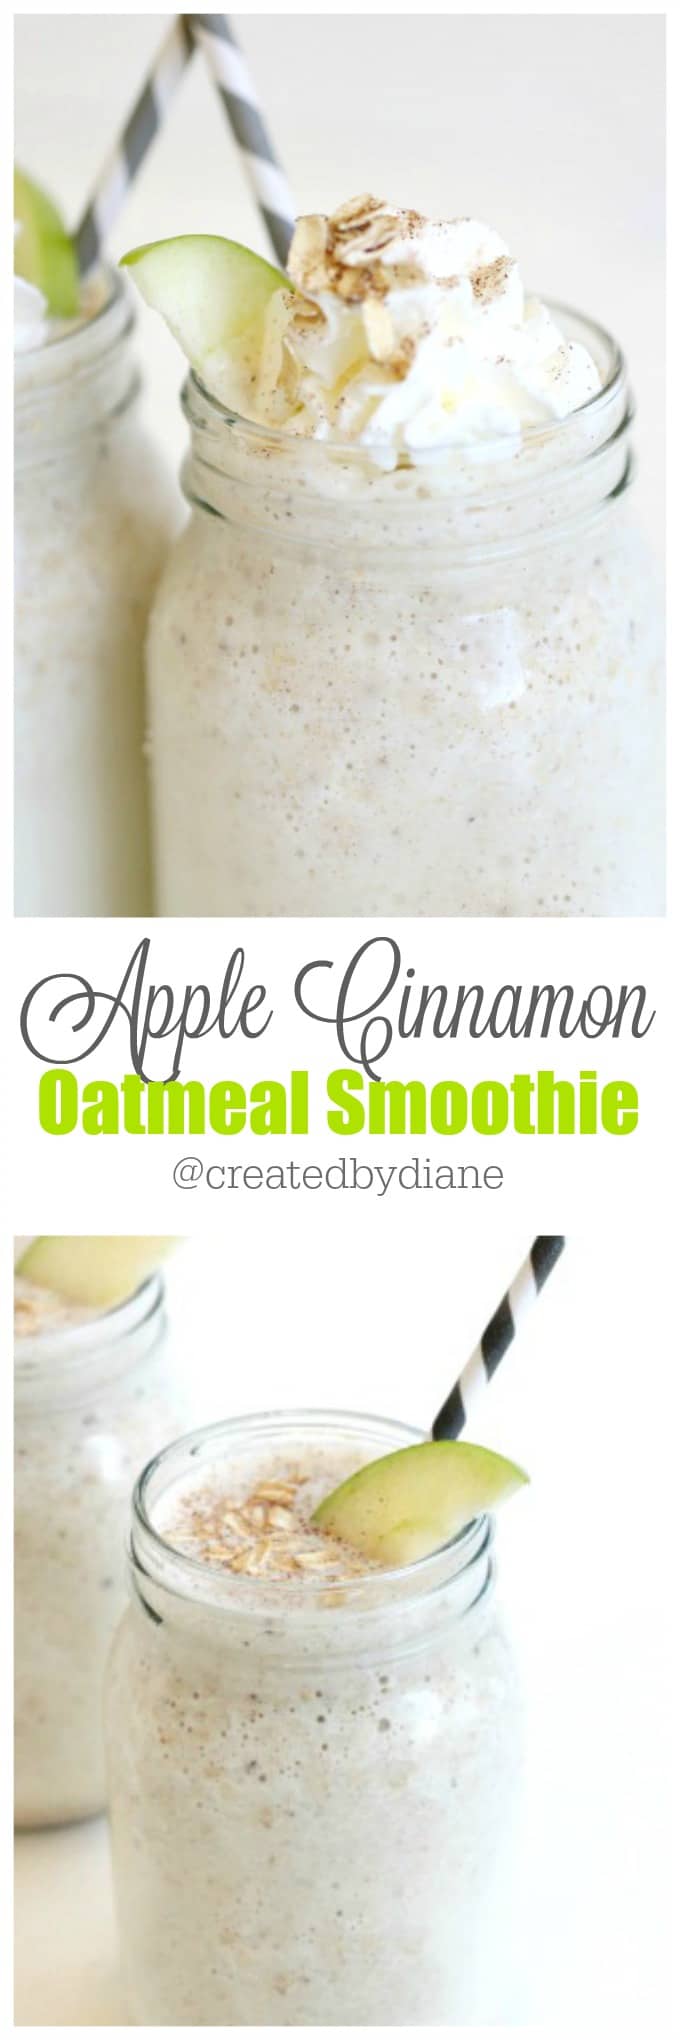 apple cinnamon oatmeal smoothie from www.createdby-diane.com @createdbydiane